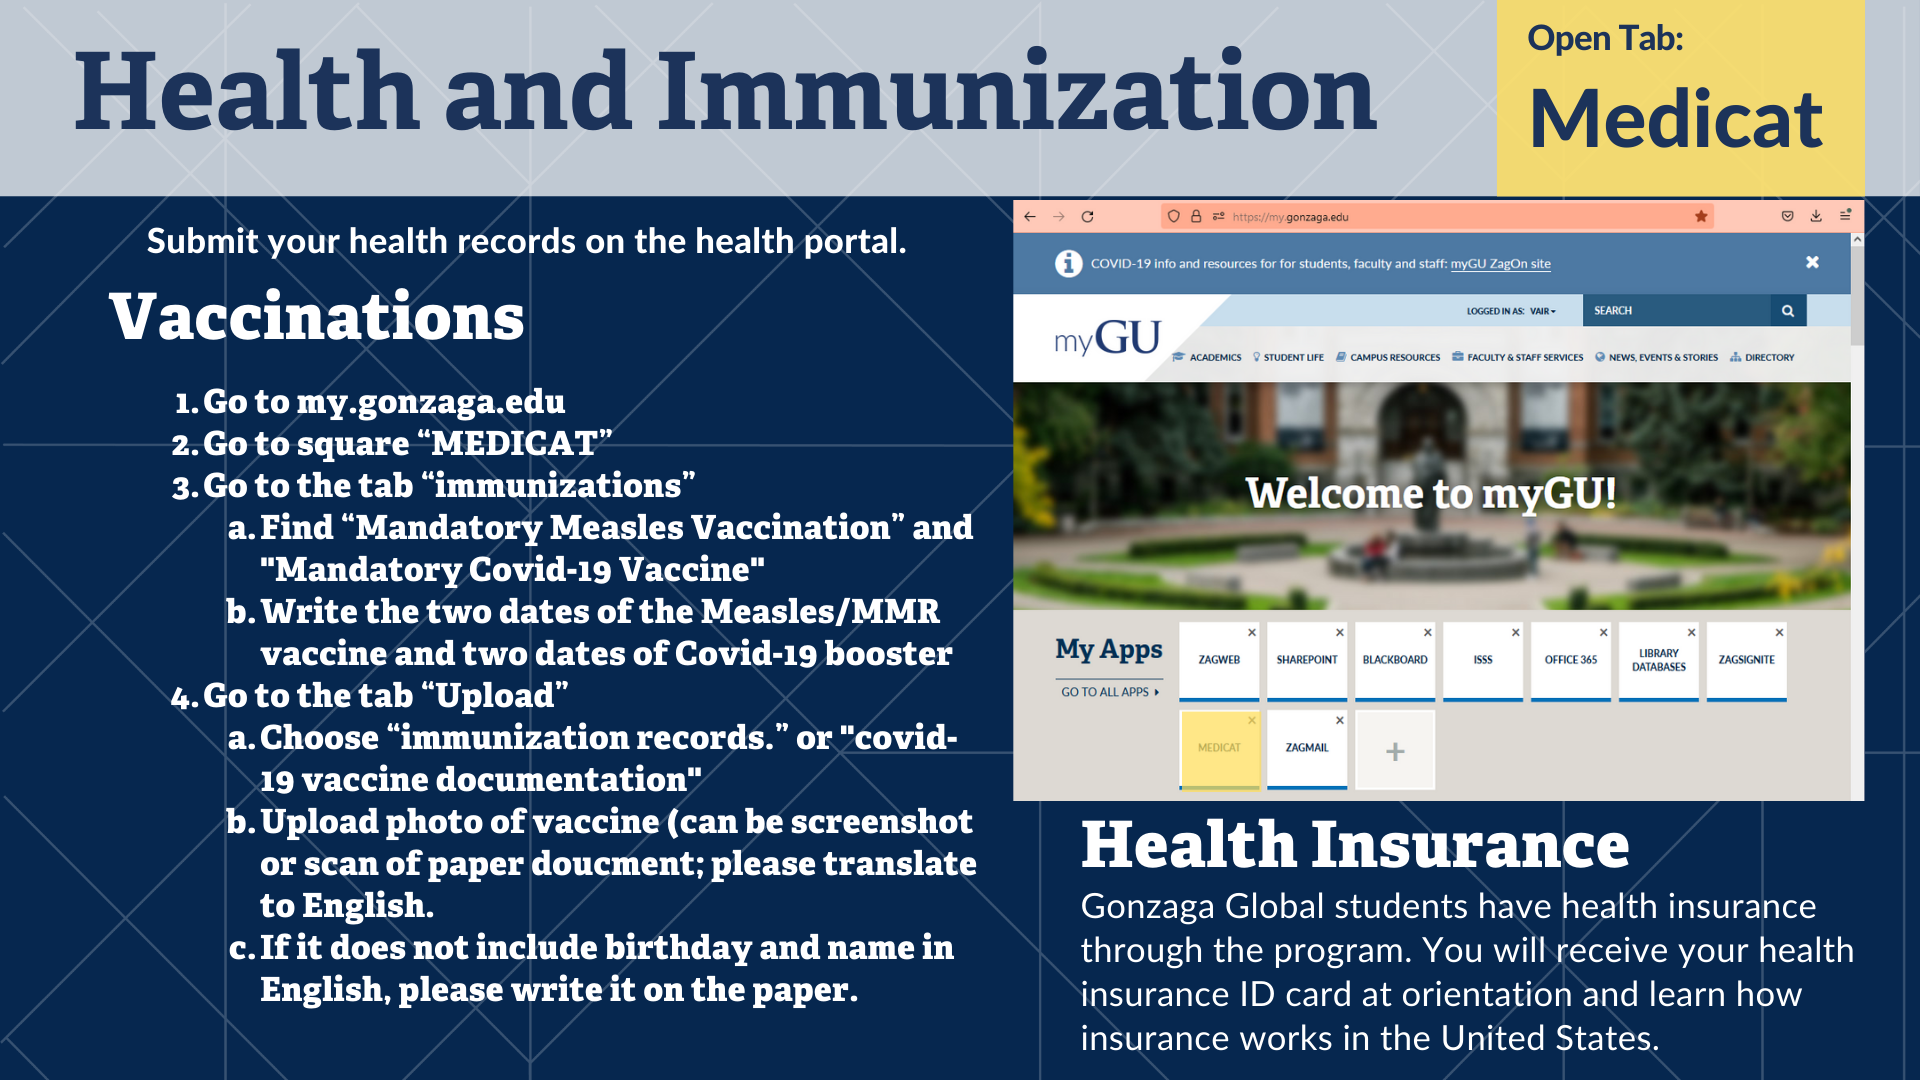 GON Health and Immunization